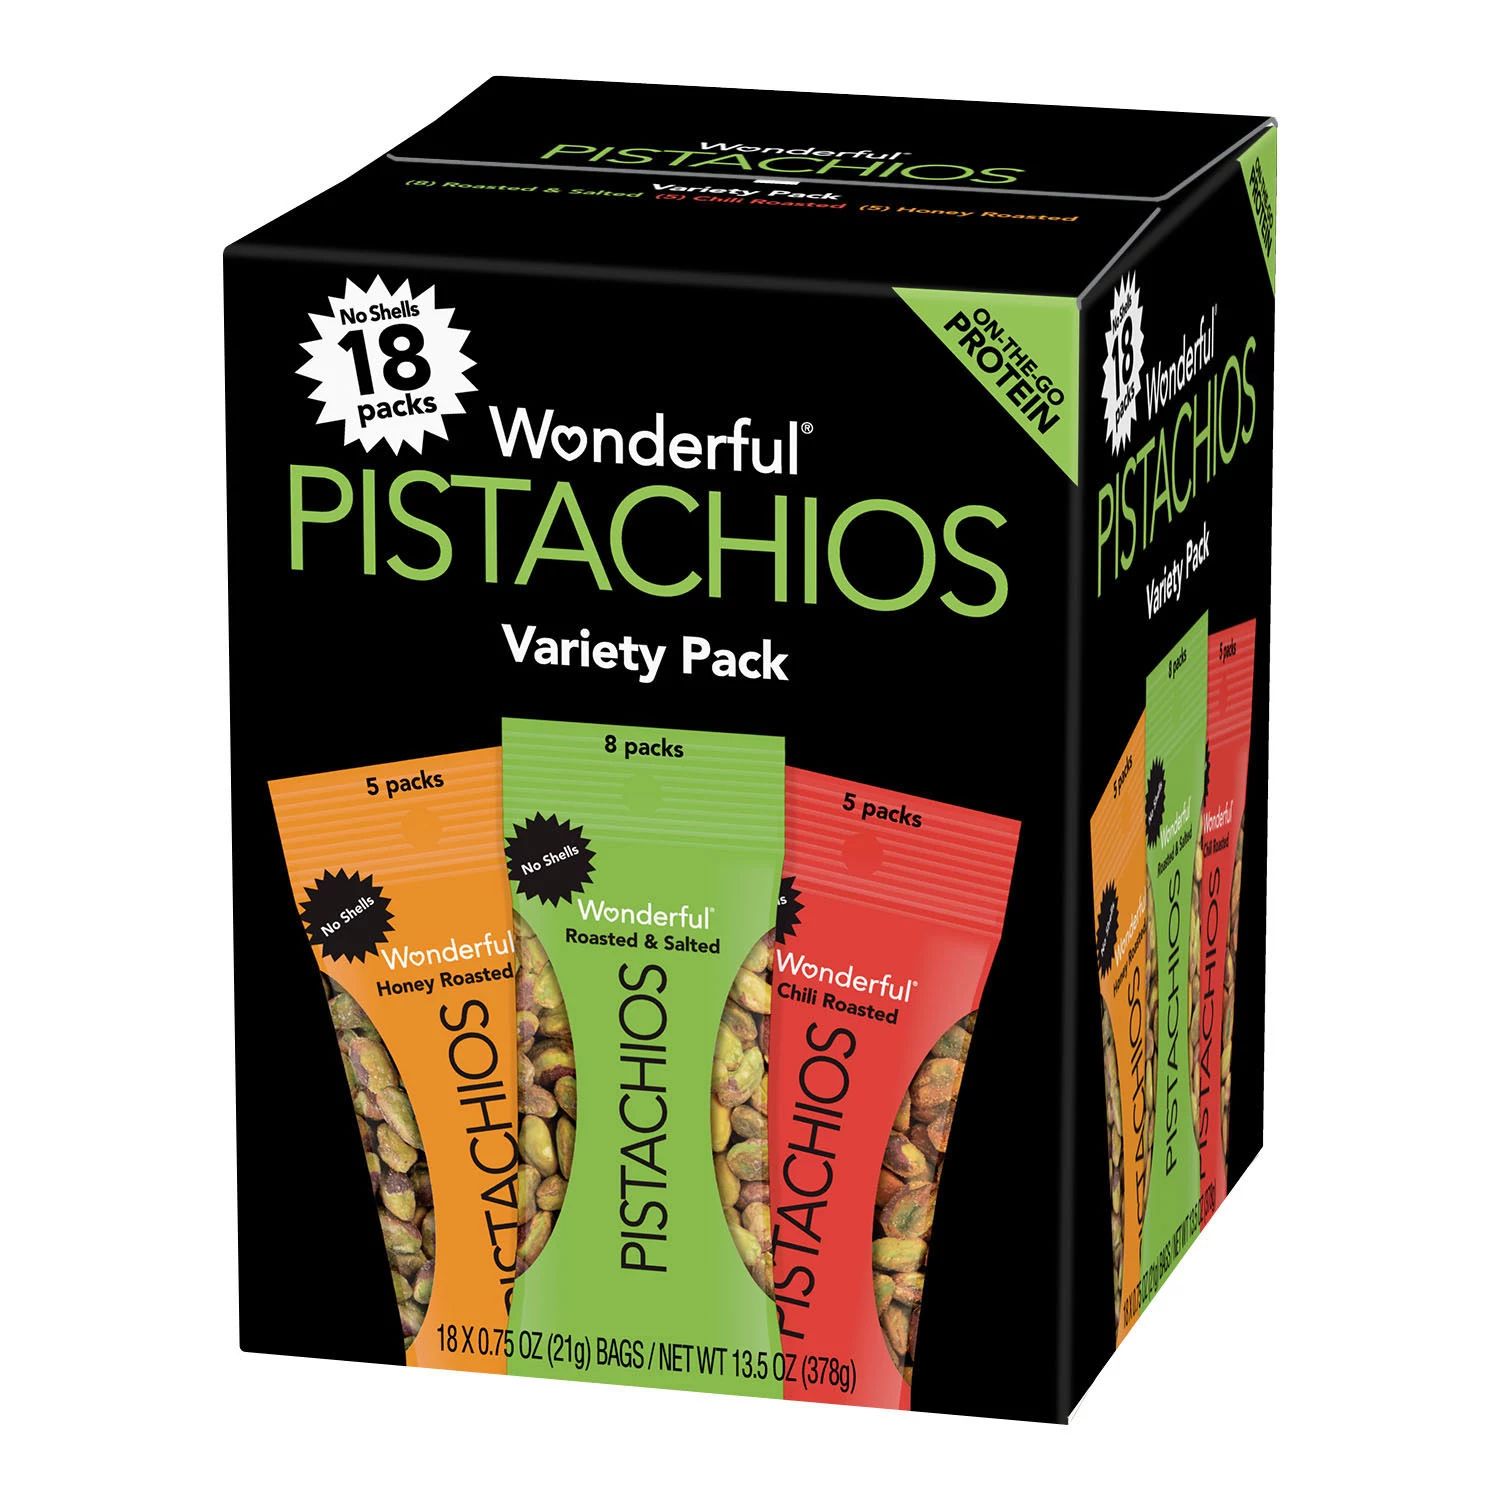 Wonderful Pistachios No Shells Variety Pack (0.75 oz., 18 pk.) | Sam's Club